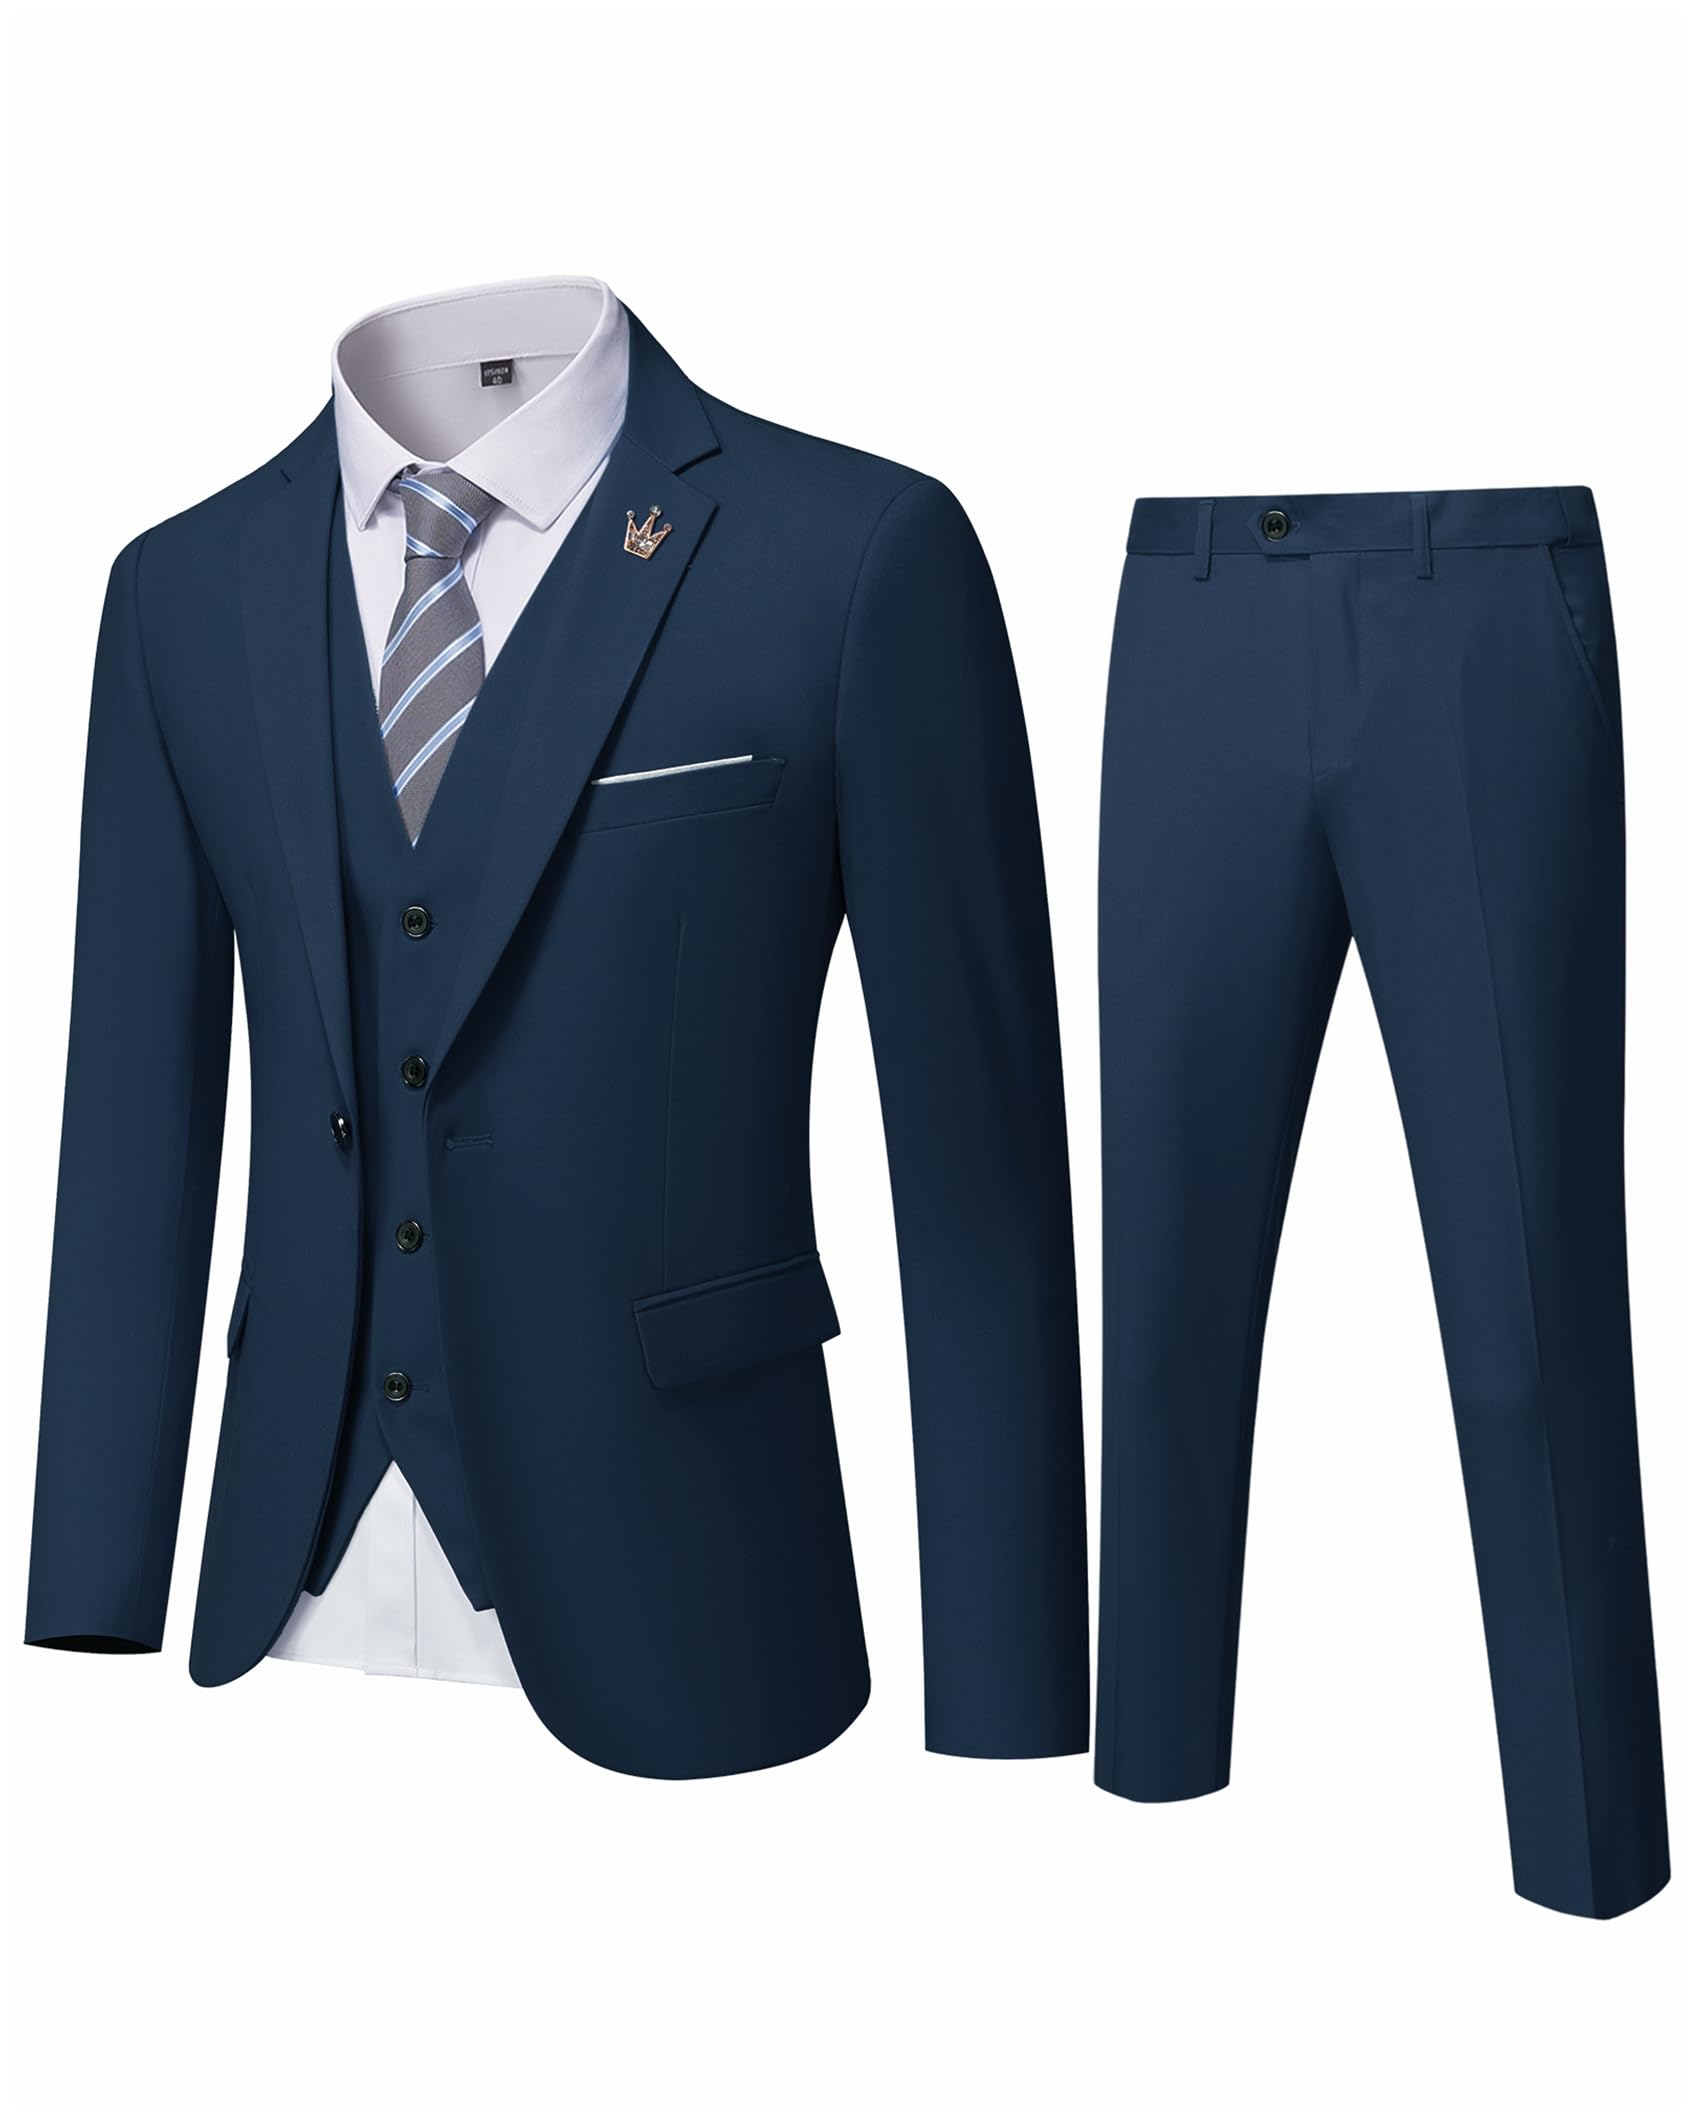 EastSide Herren Slim Fit 3-teiliger Anzug, Ein-Knopf-Blazer-Set, Jacke Weste & Hose, dunkelblau, S